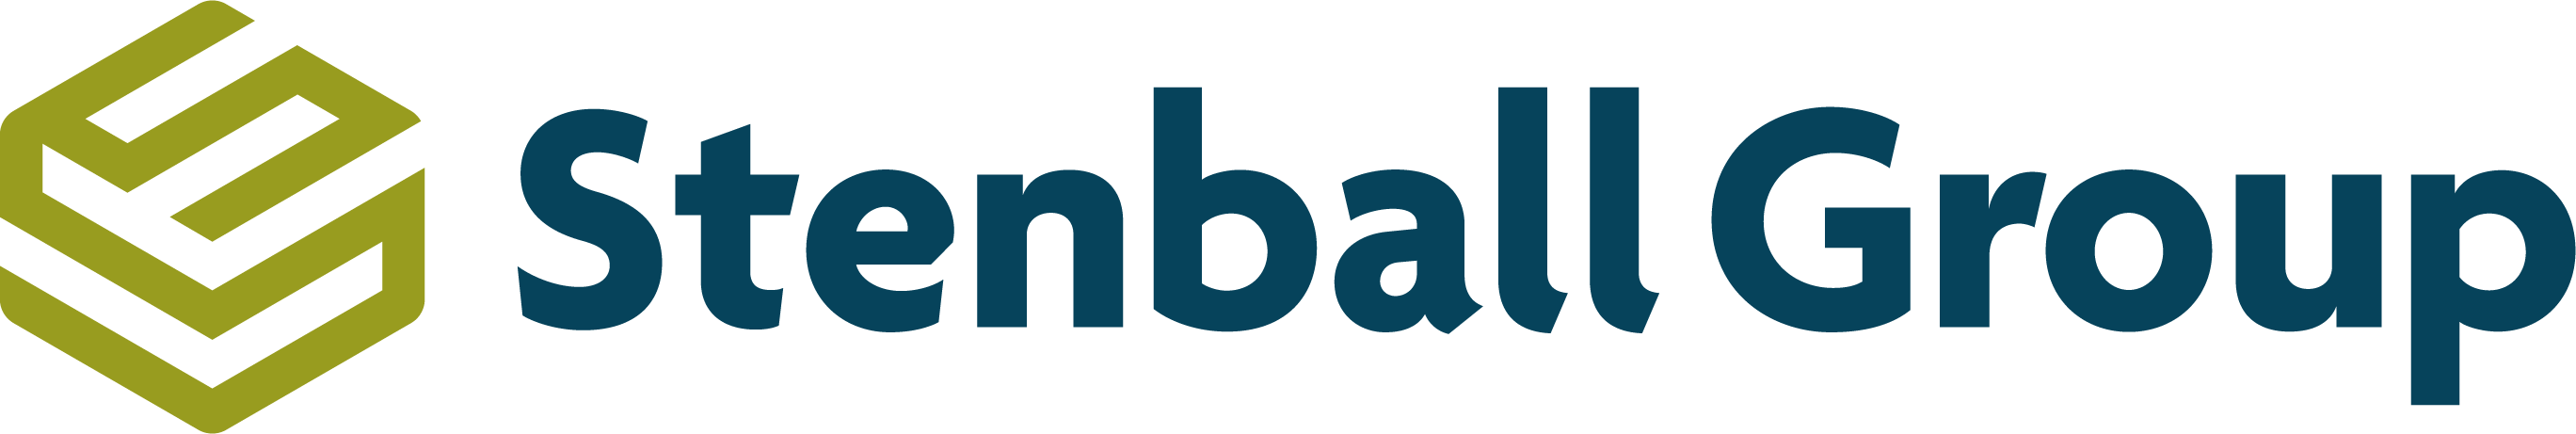 Stenball Group Logo